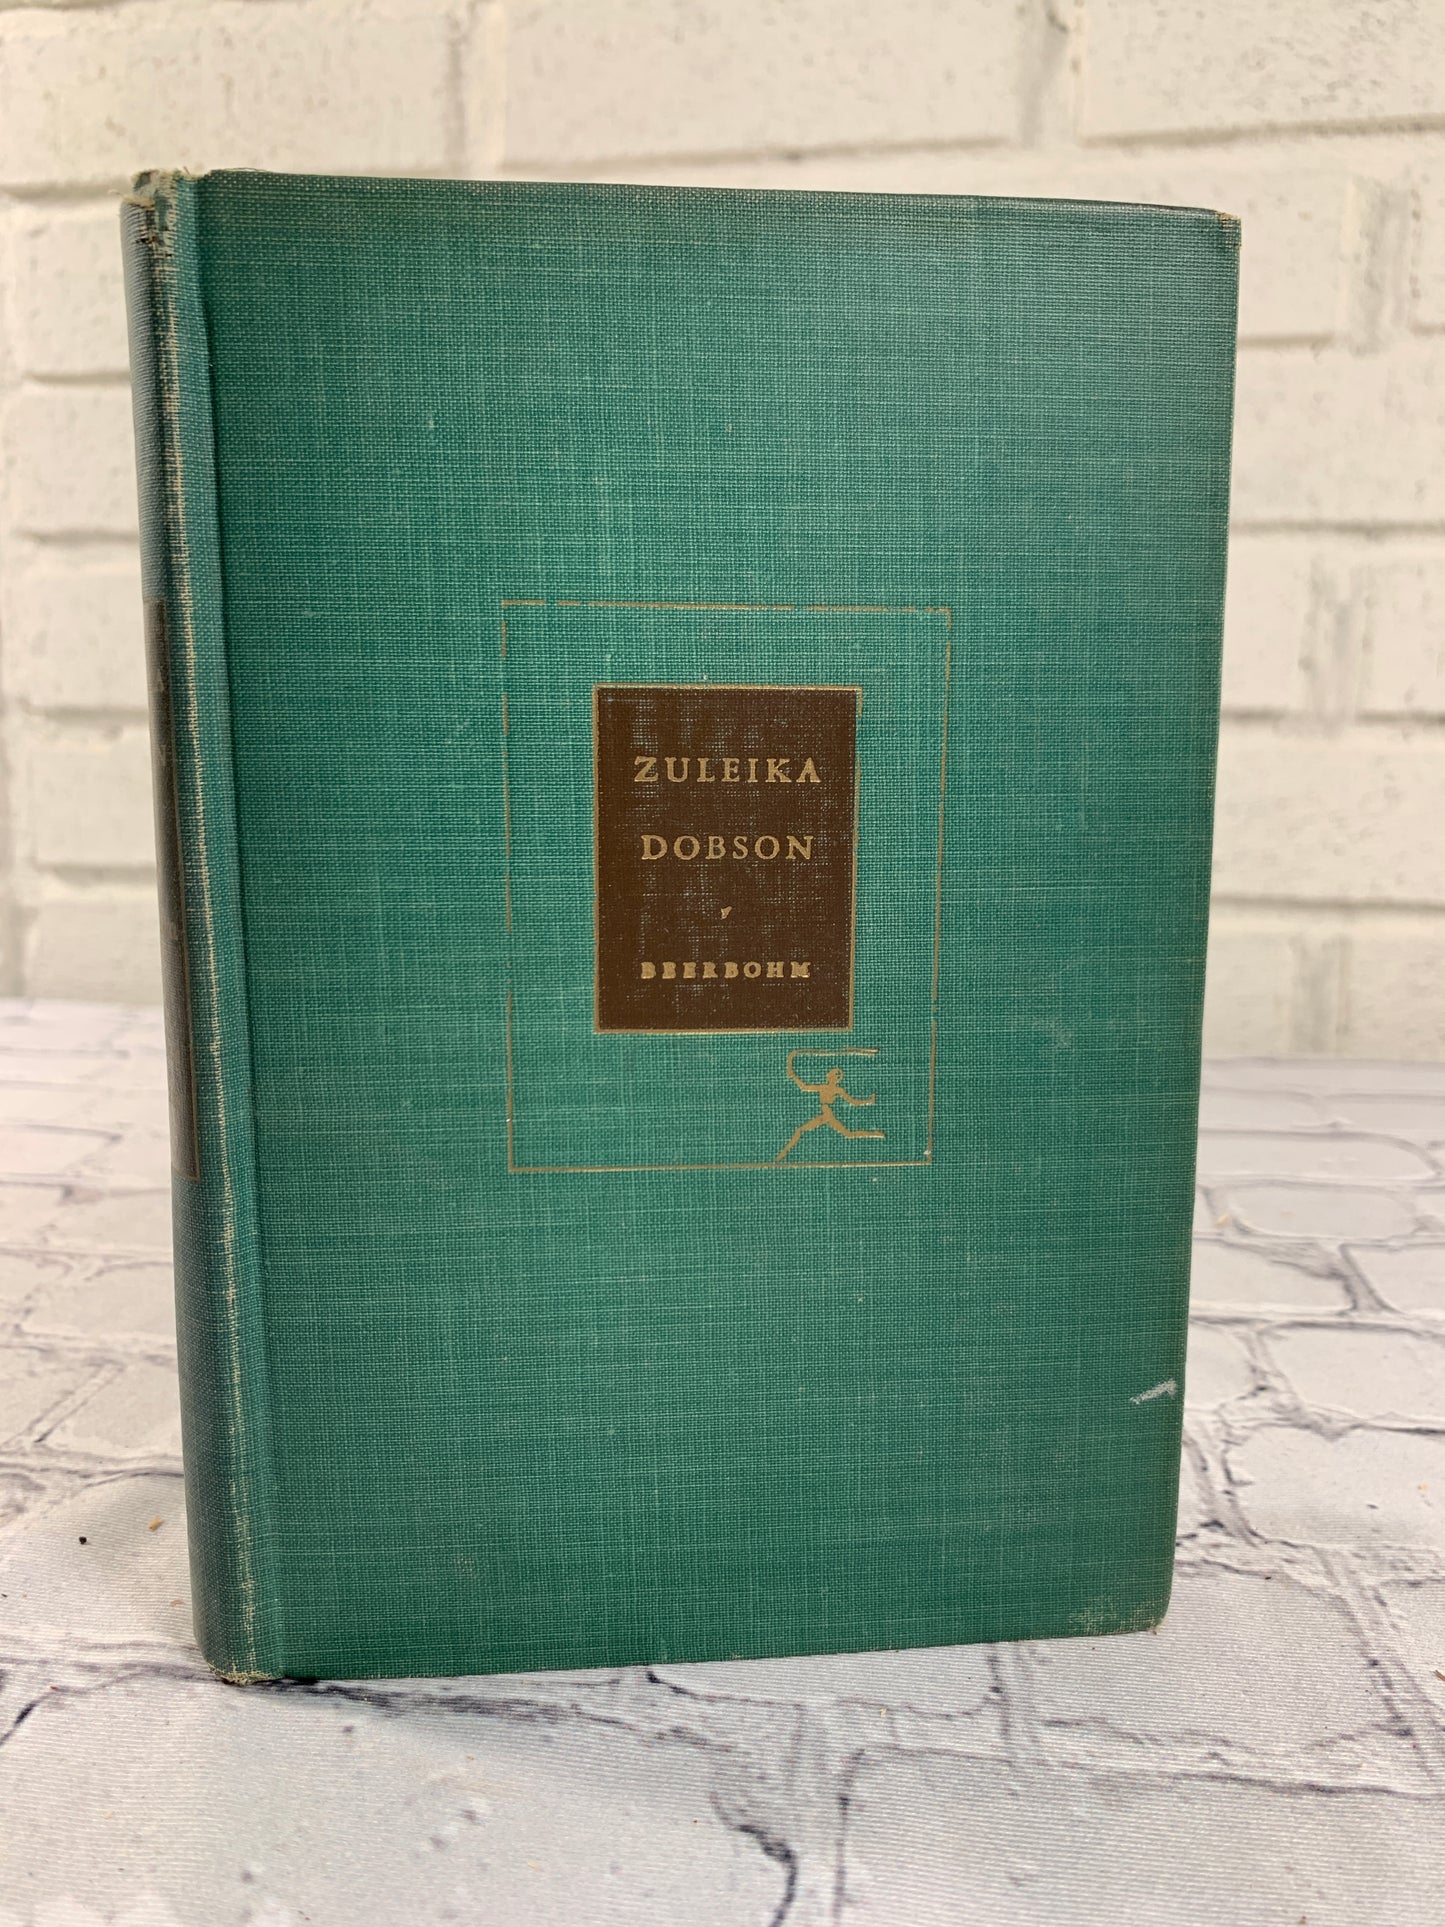 Zuleika Dobson by Max Beerbohm [1926]